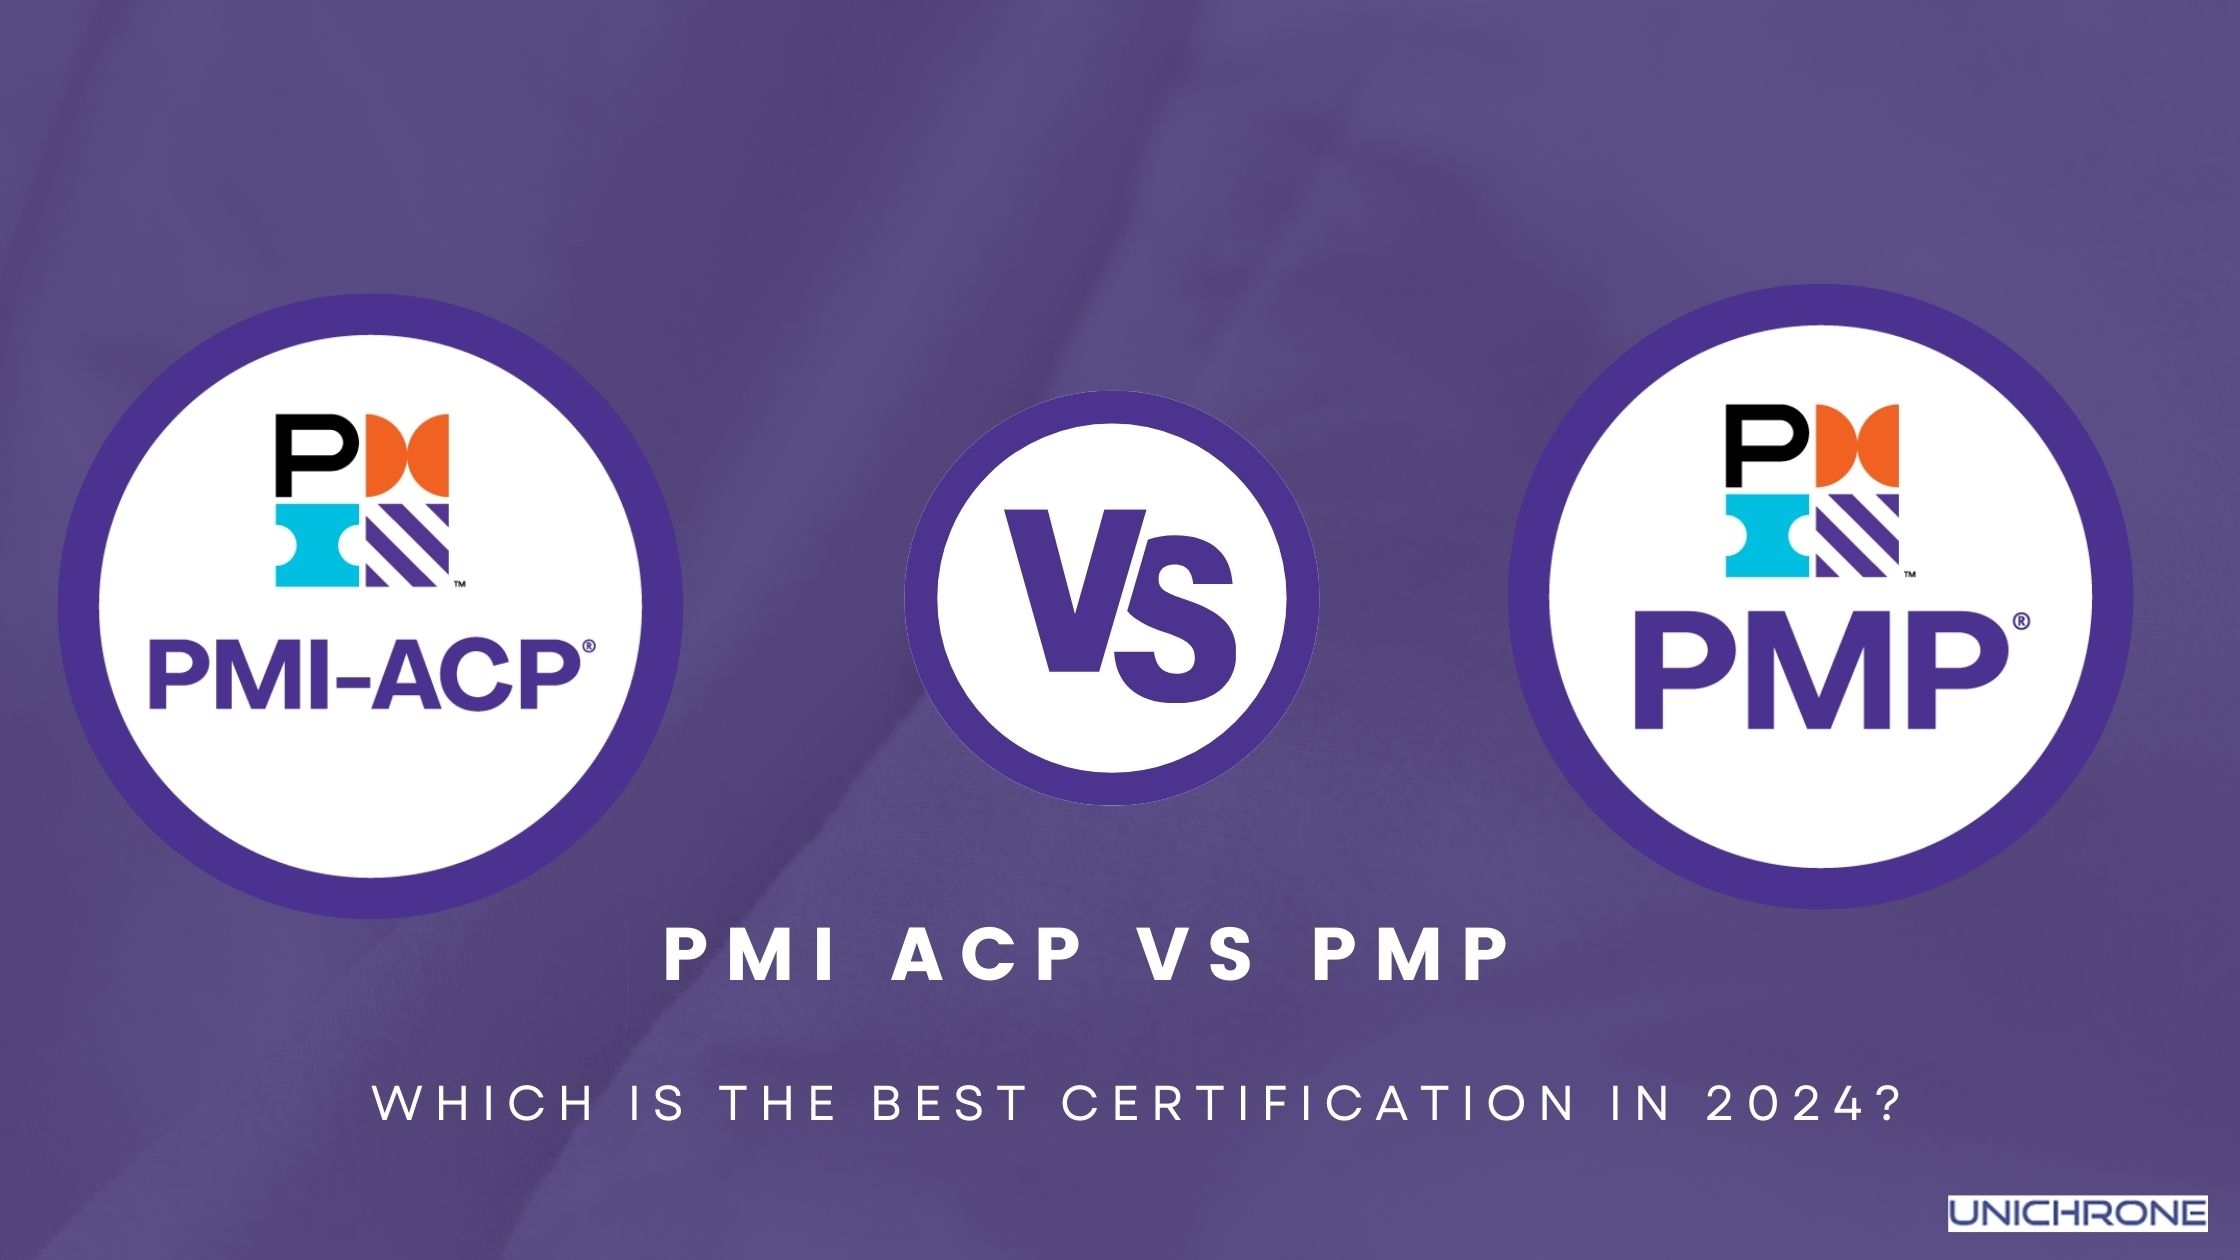 pmi-acp vs pmp, pmp vs pmi